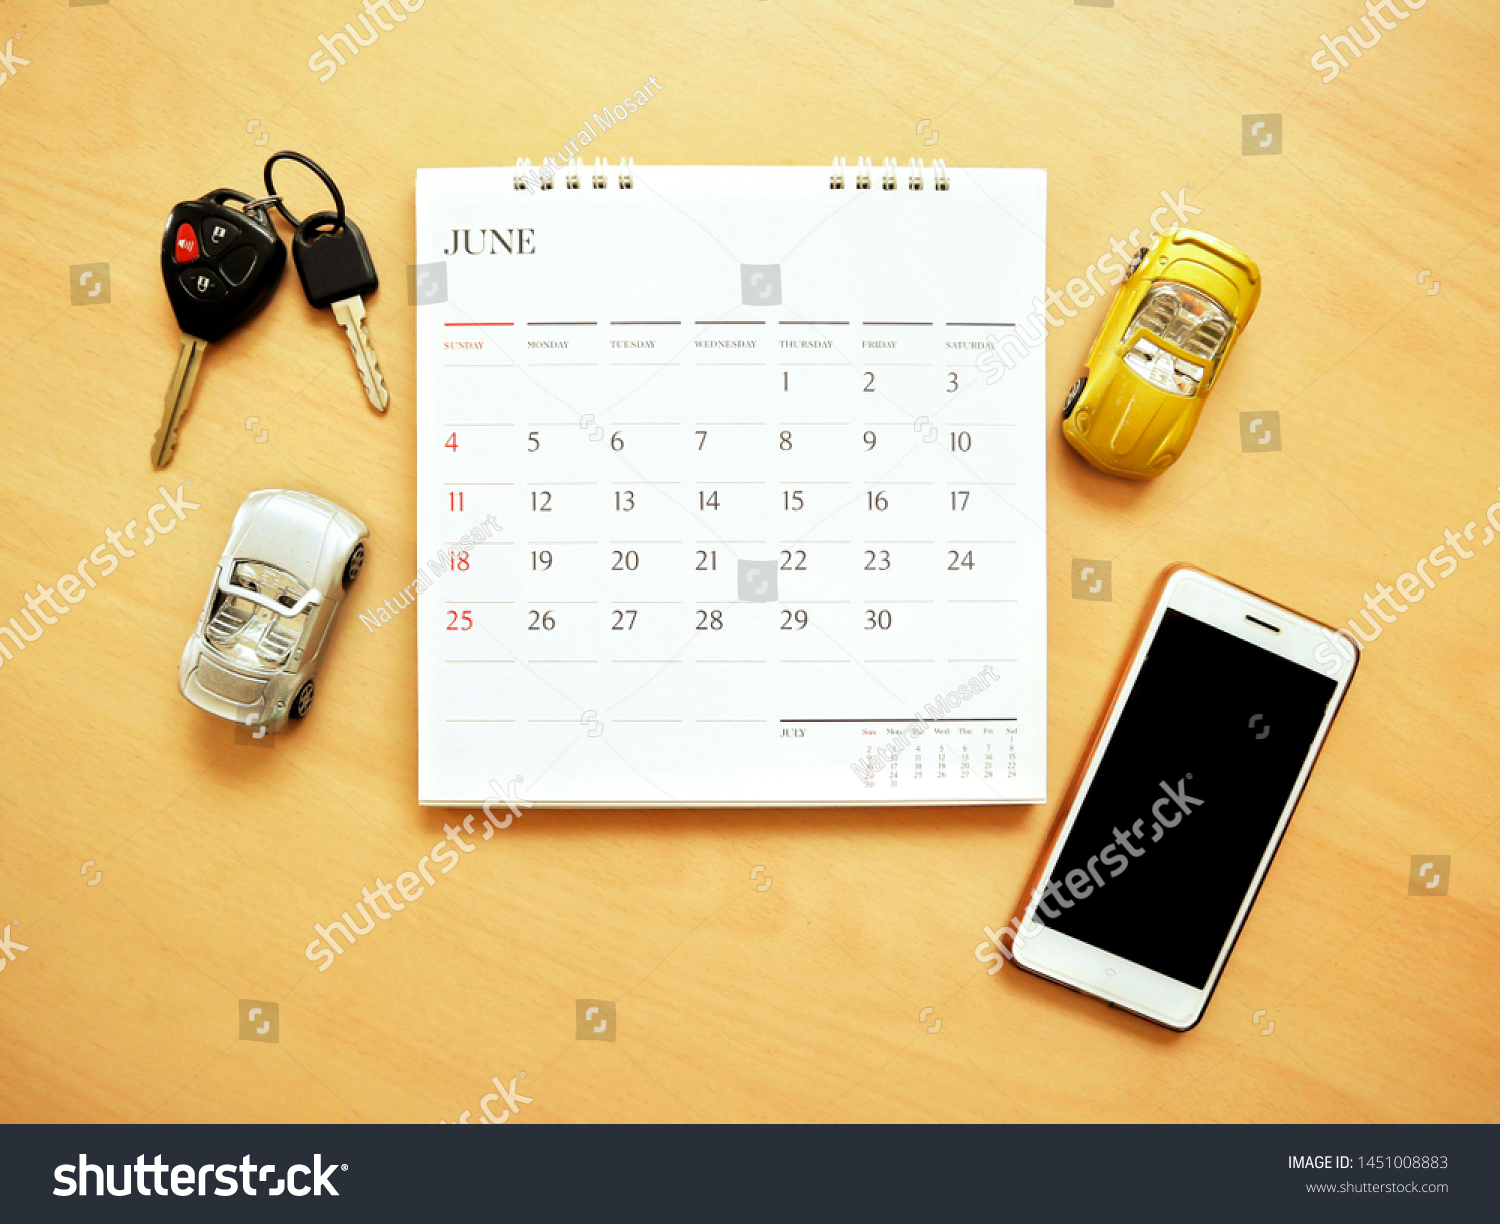 White Smartphone Black Remote Car Key Stock Photo Edit Now